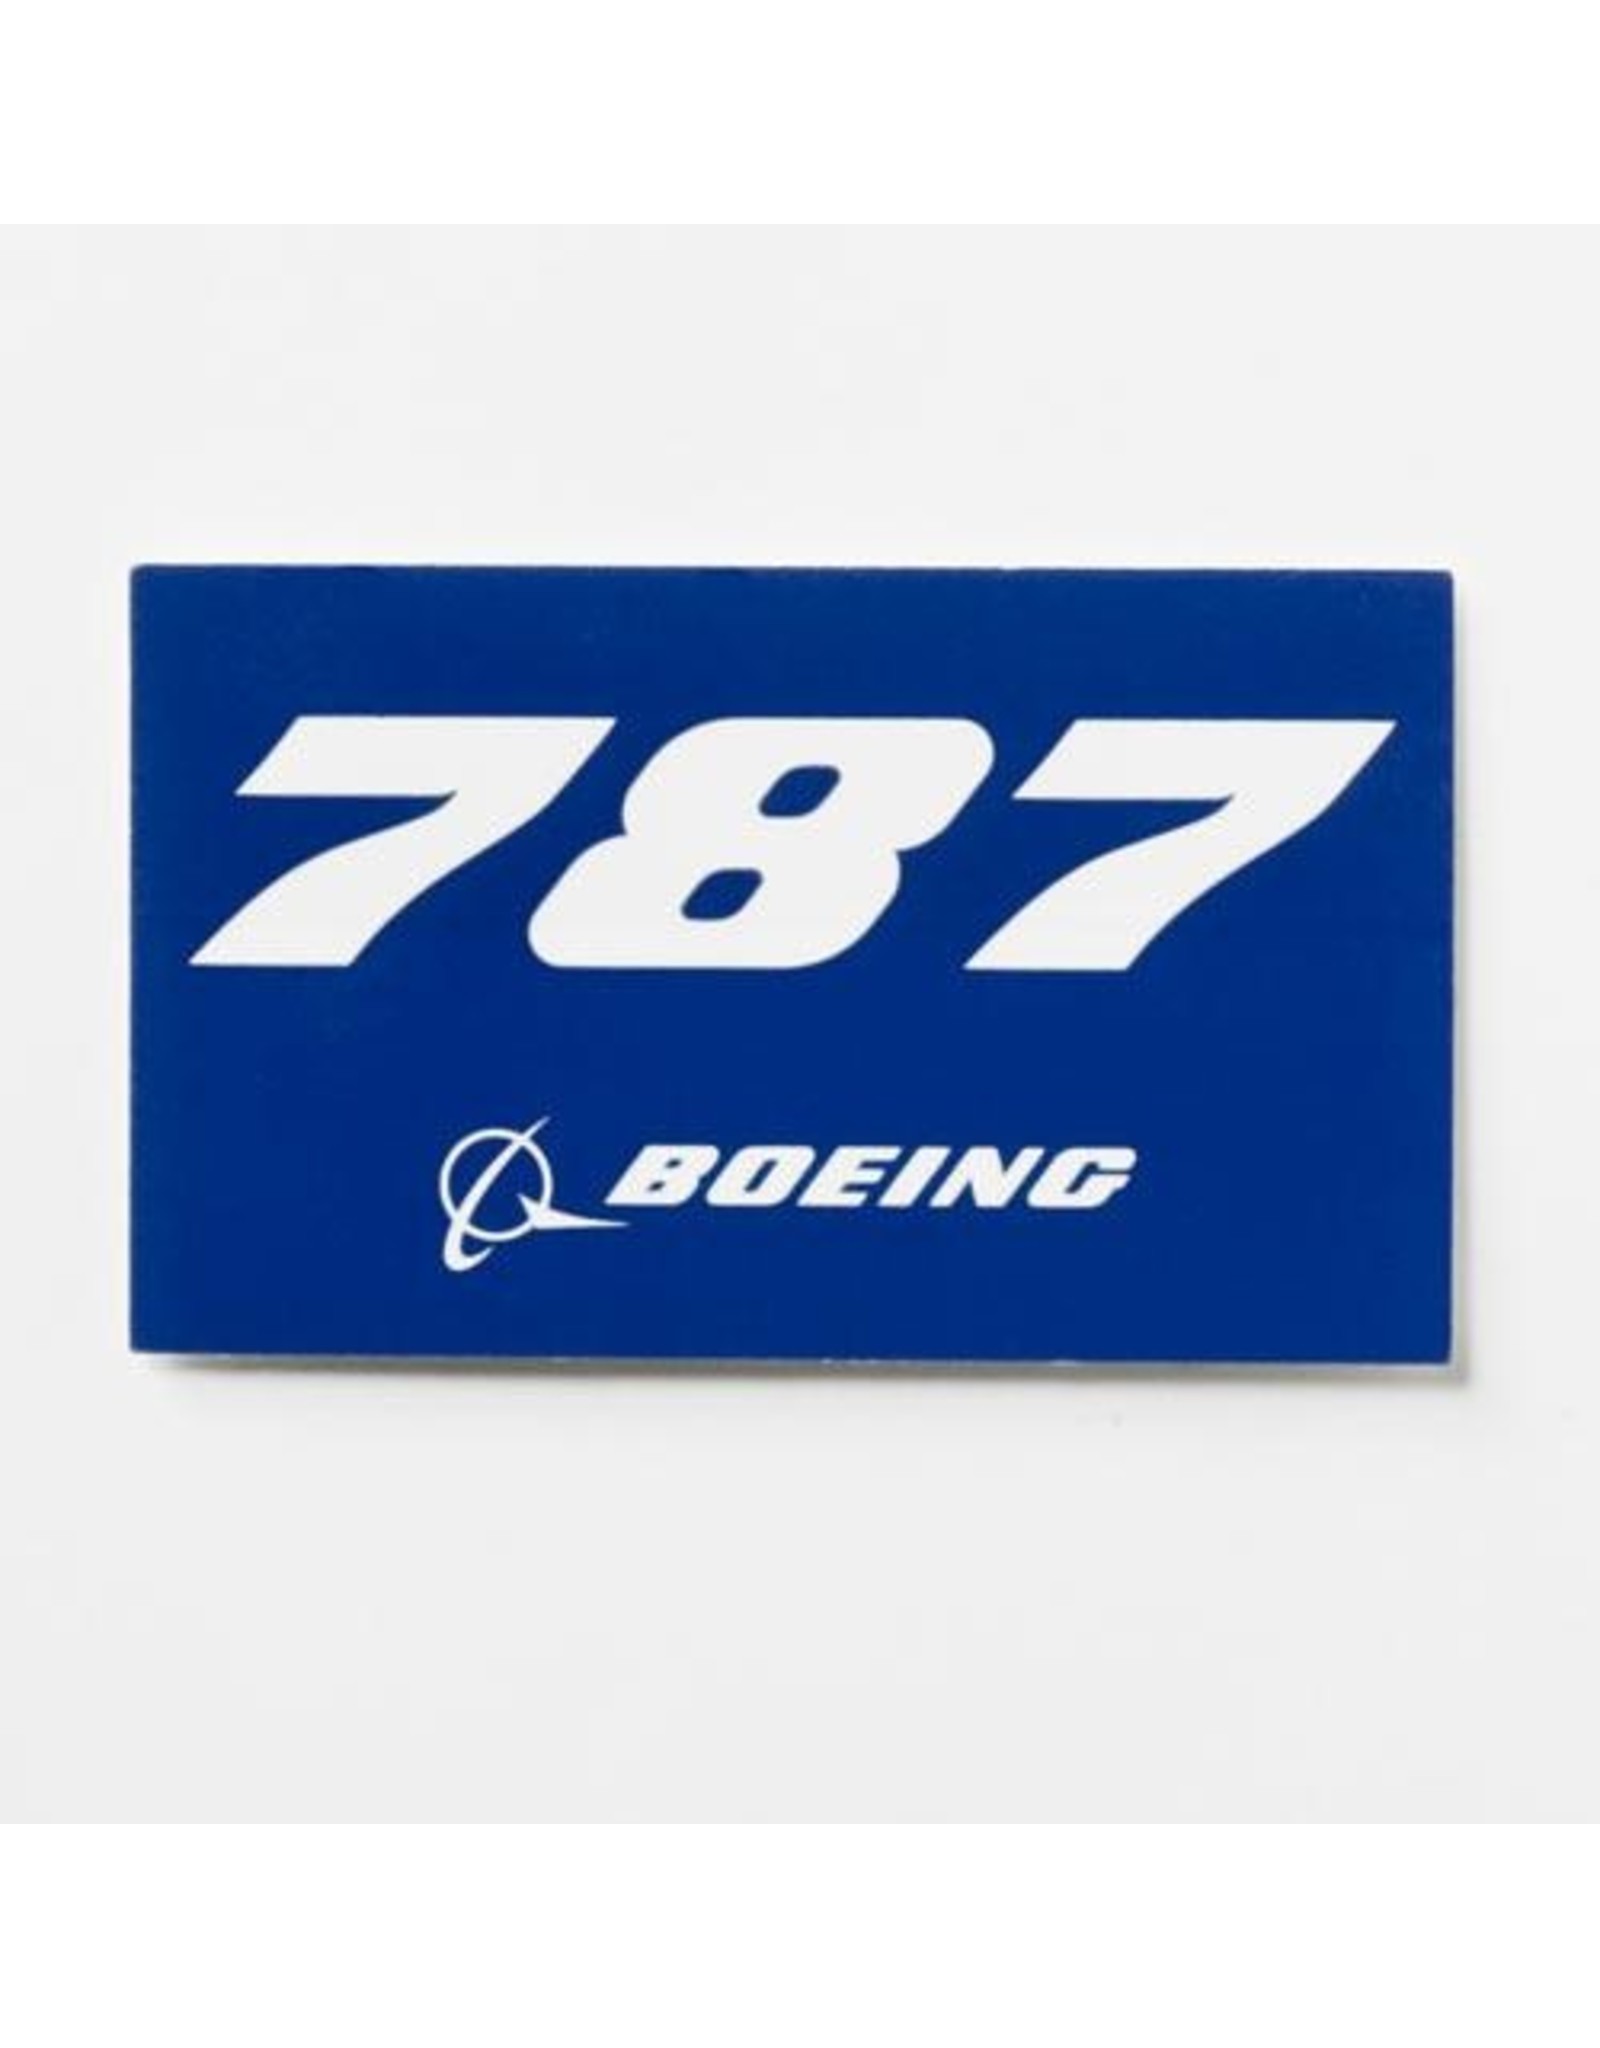 Boeing Boeing Sticker 787 rectangle